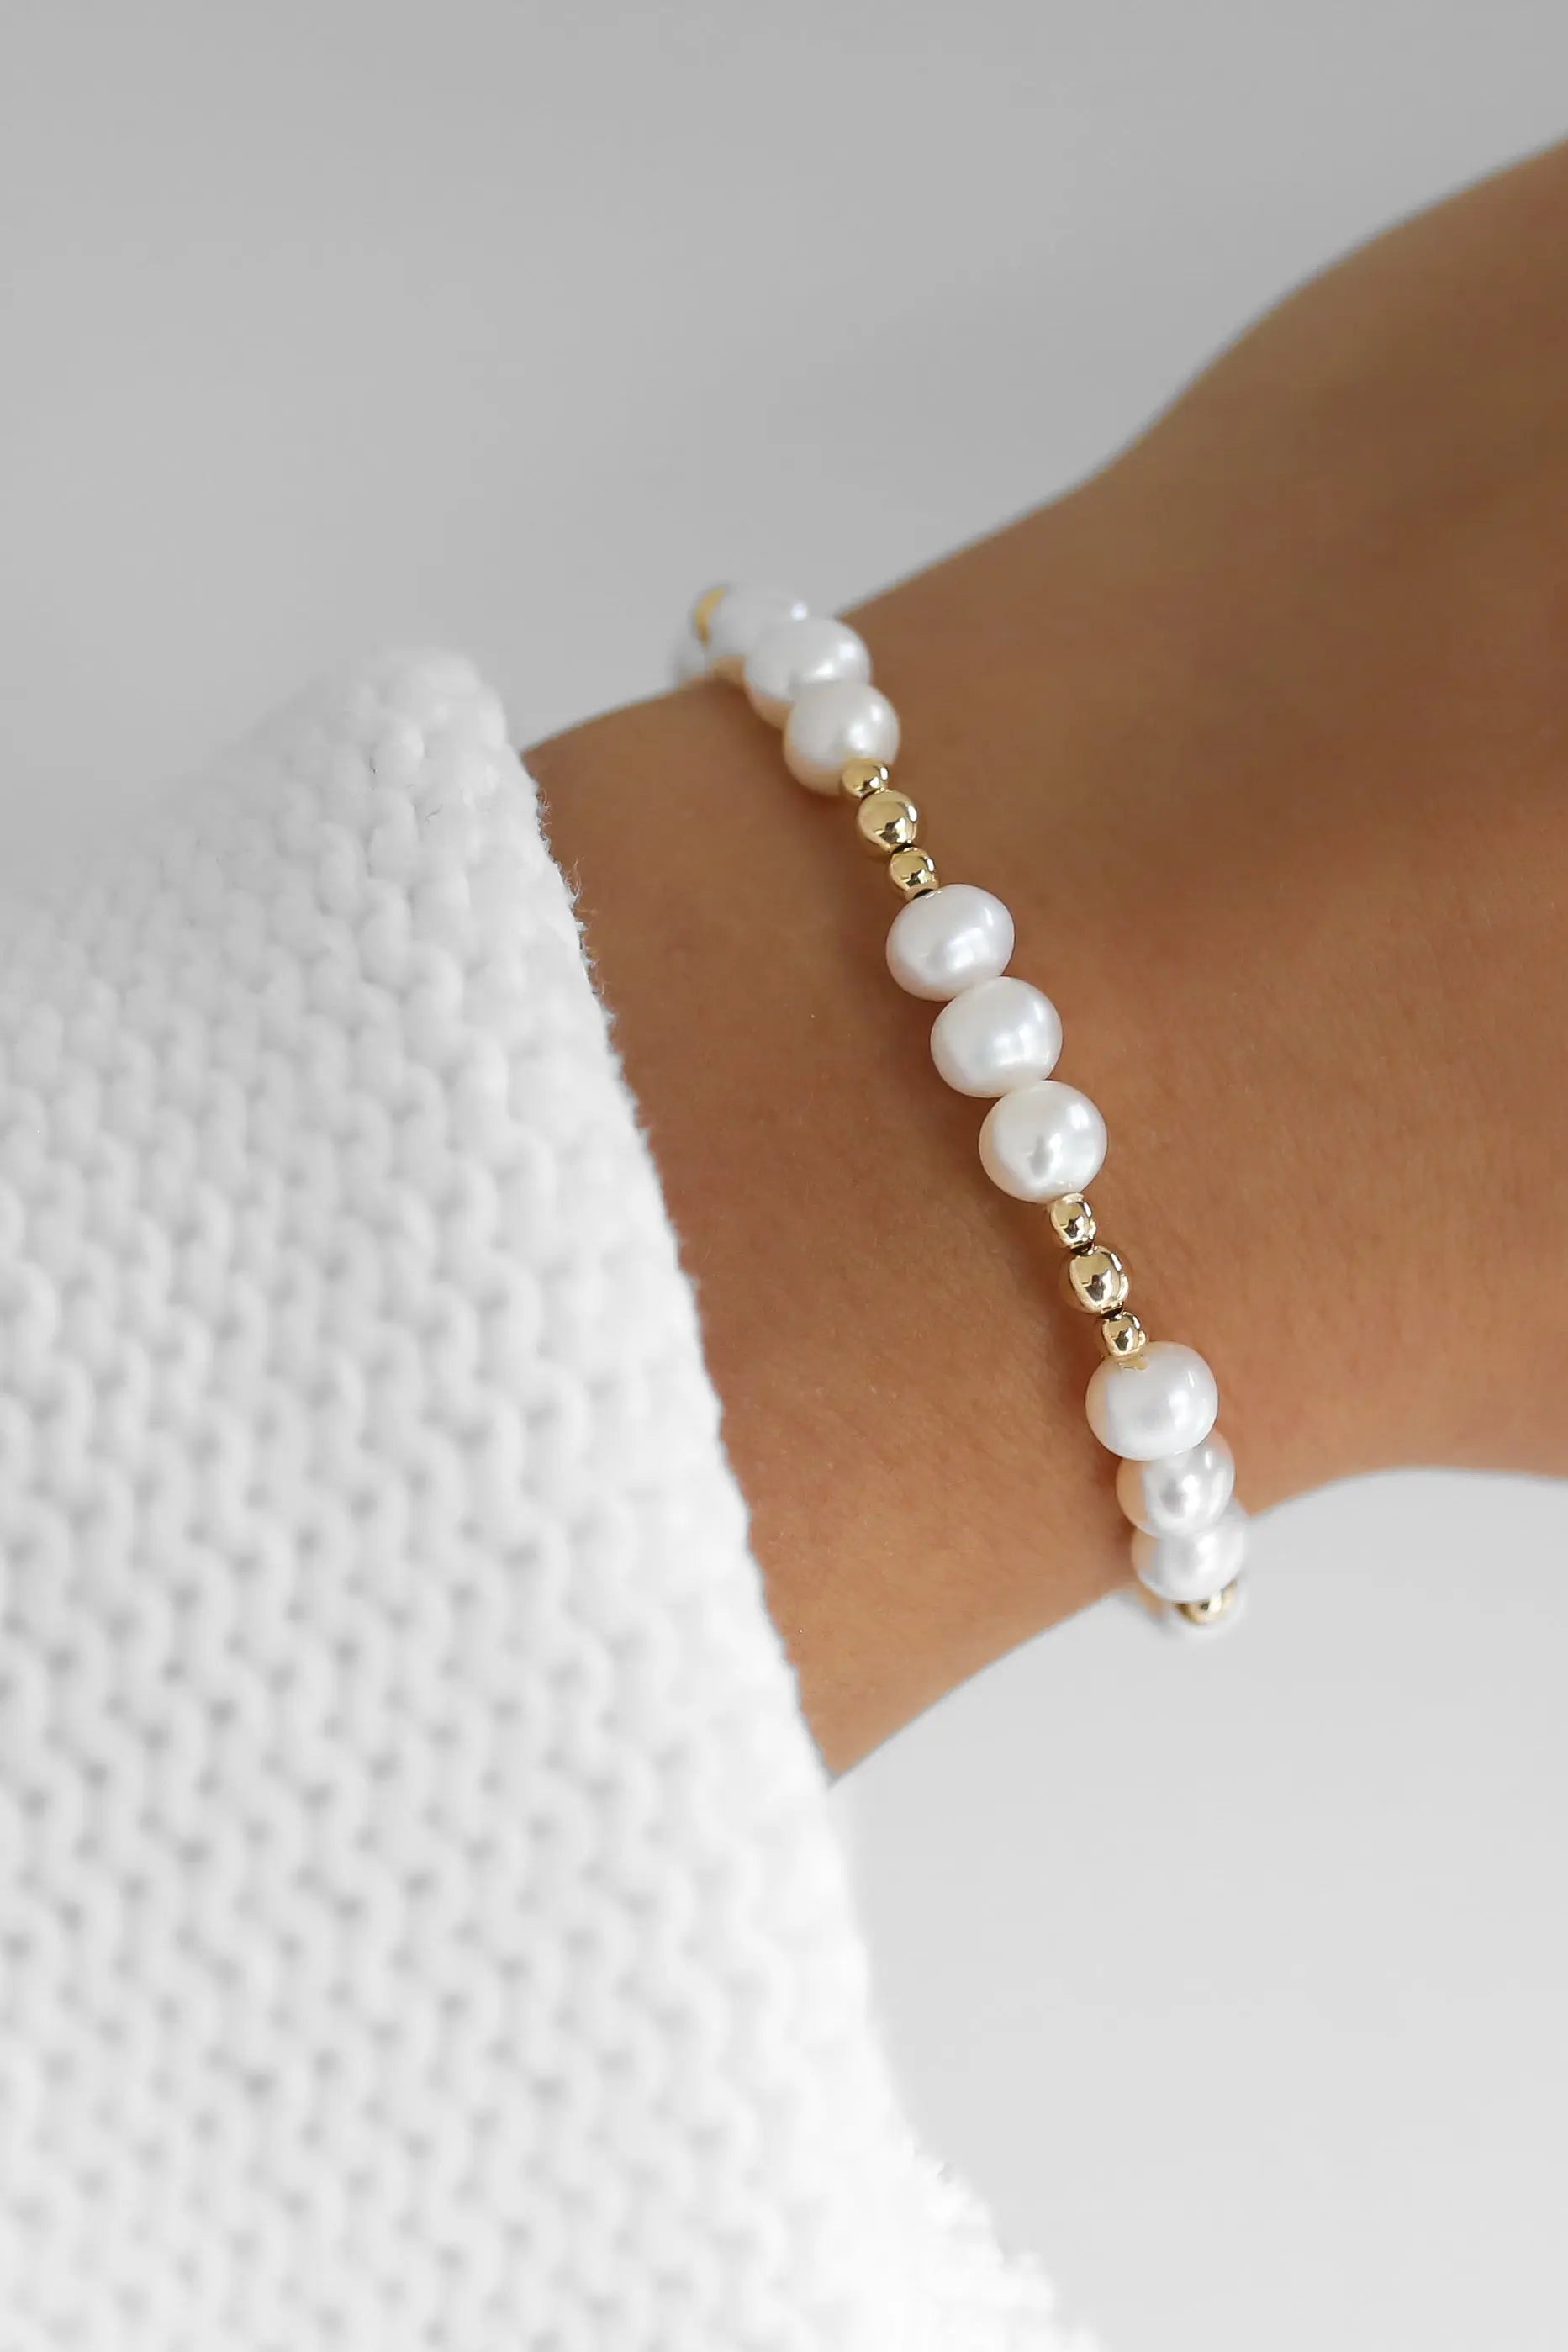  Lulu Pearl Bracelet - lulu-pearl-bracelet-worn_aa673b4b-befb-45f0-b8e5-5265e7a8b969.jpg